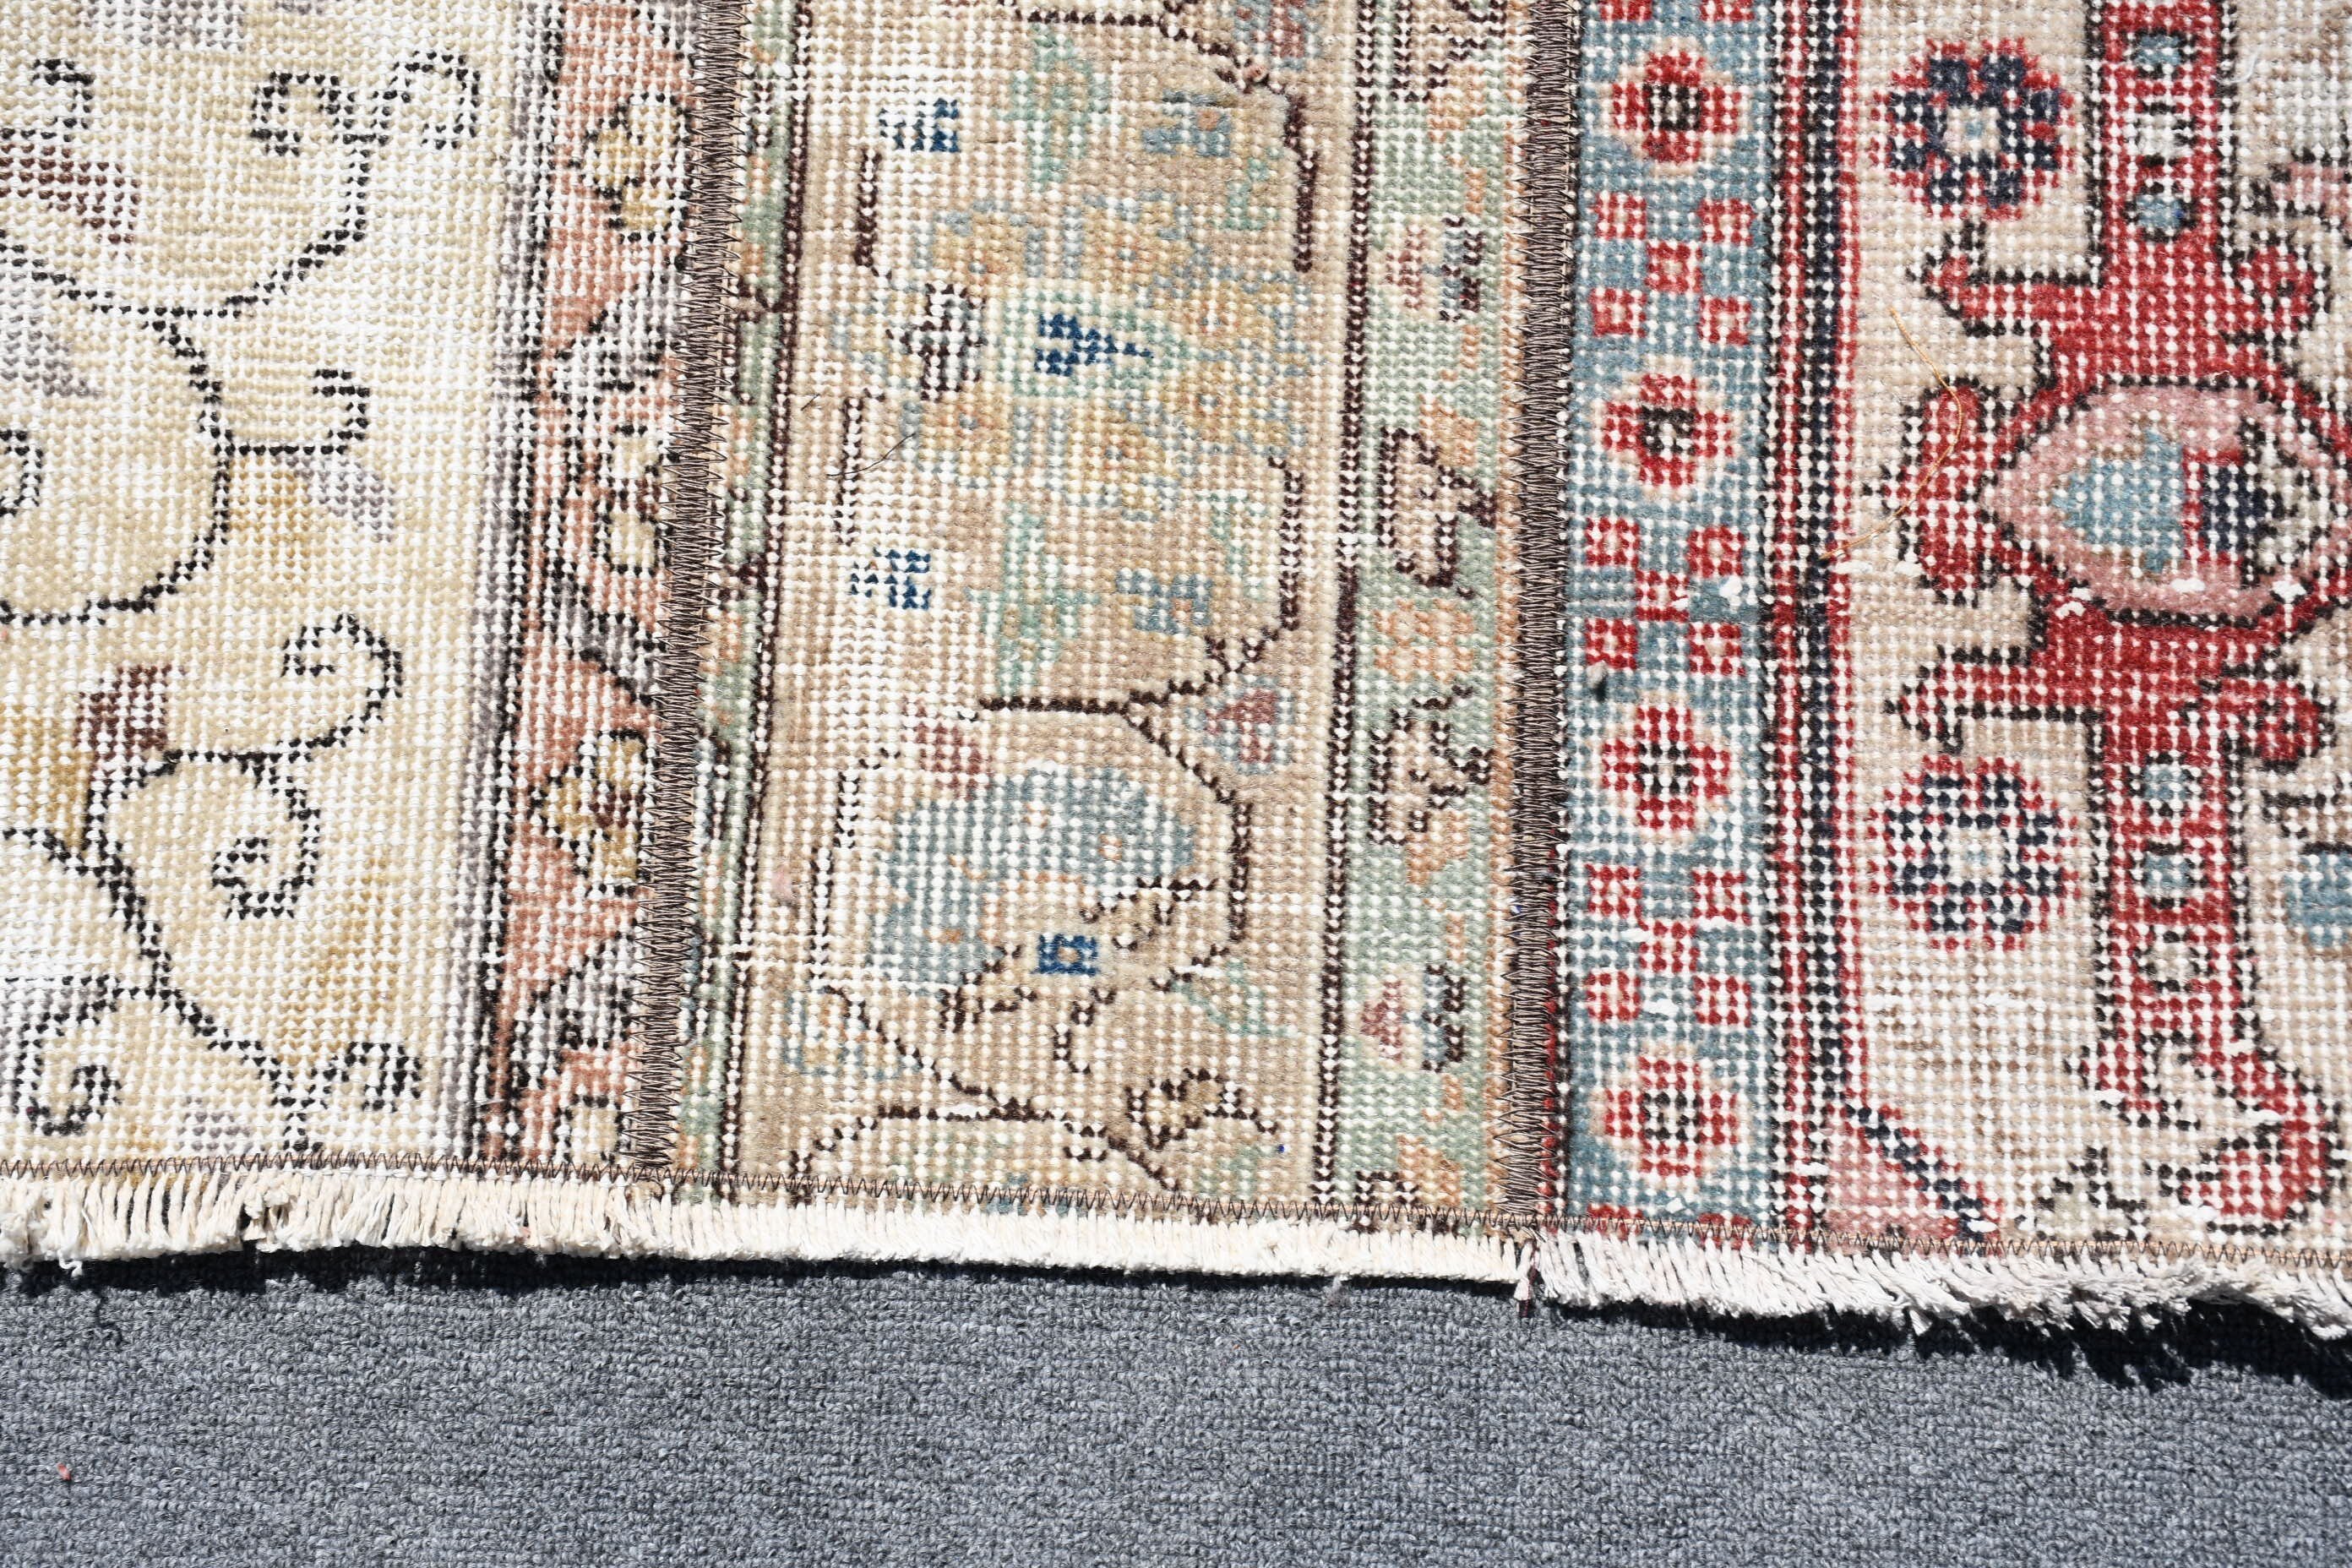 Bedroom Rug, Kitchen Rugs, Rugs for Entry, Moroccan Rug, Turkish Rug, Vintage Rug, Turkey Rug, Beige Wool Rugs, 3.7x6.3 ft Accent Rugs